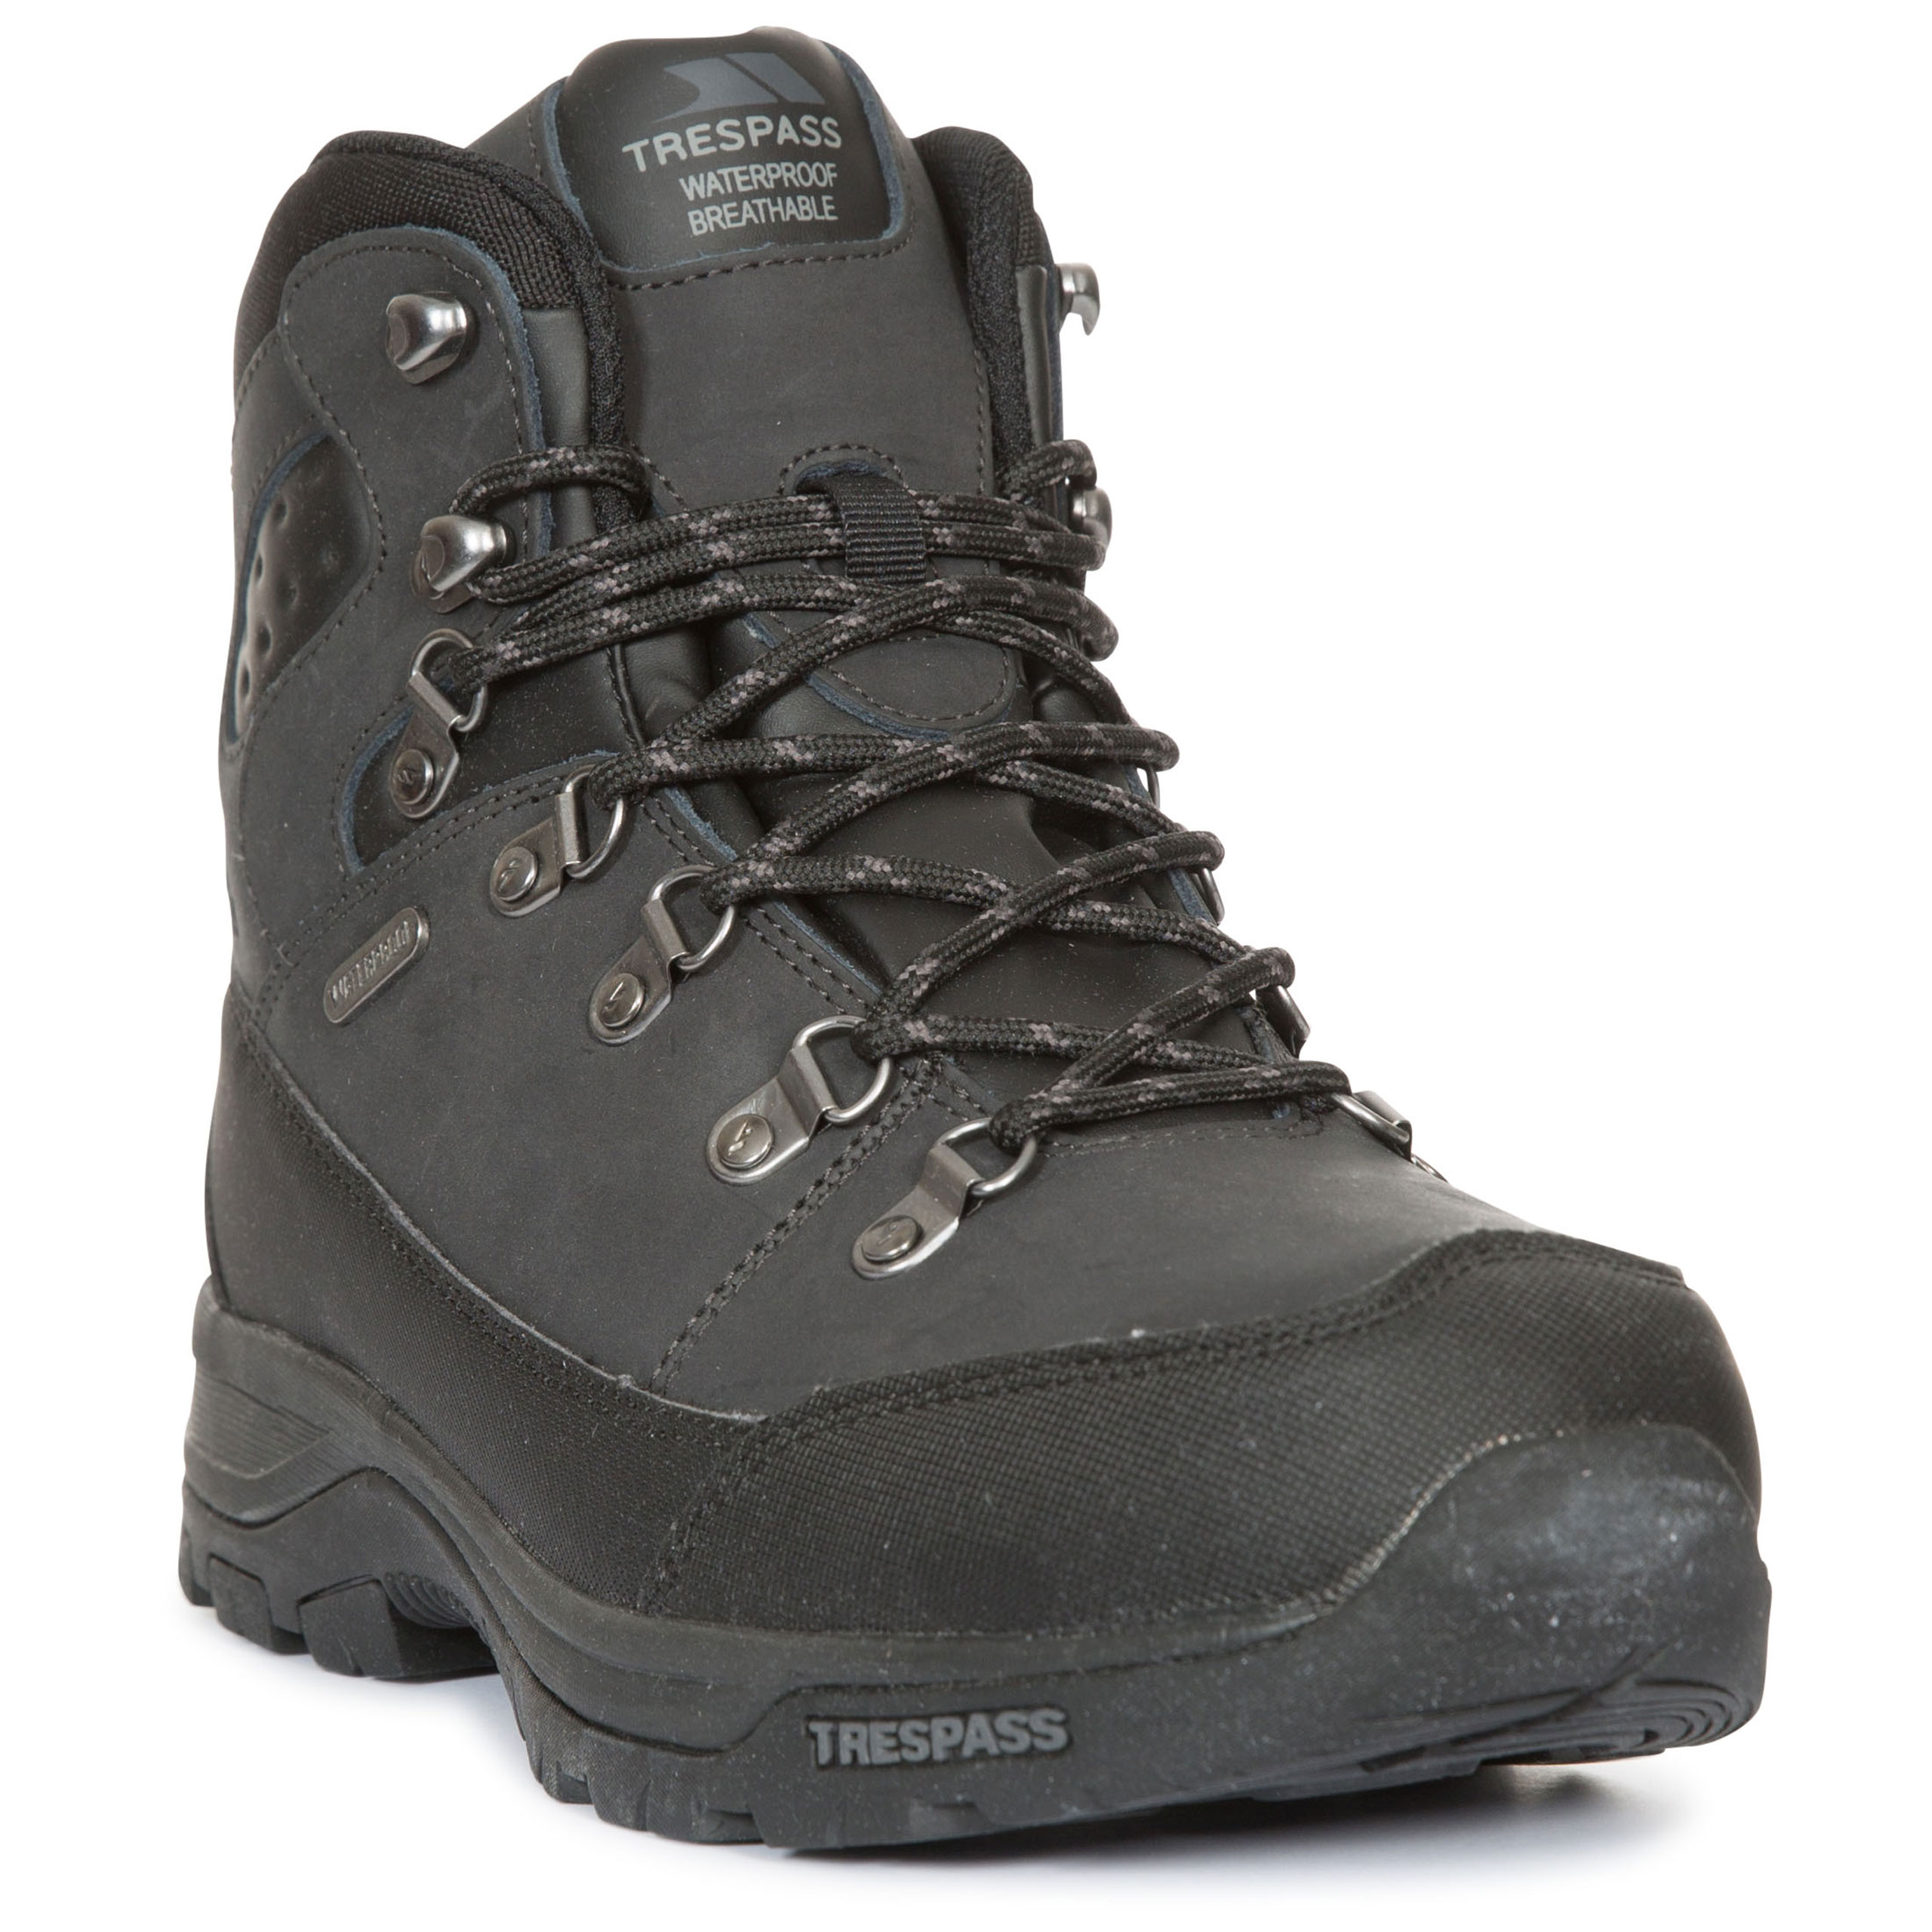 waterproof walking boots trespass-thorburn-mens-hiking-boots-lace-up-waterproof- IPSHAMW